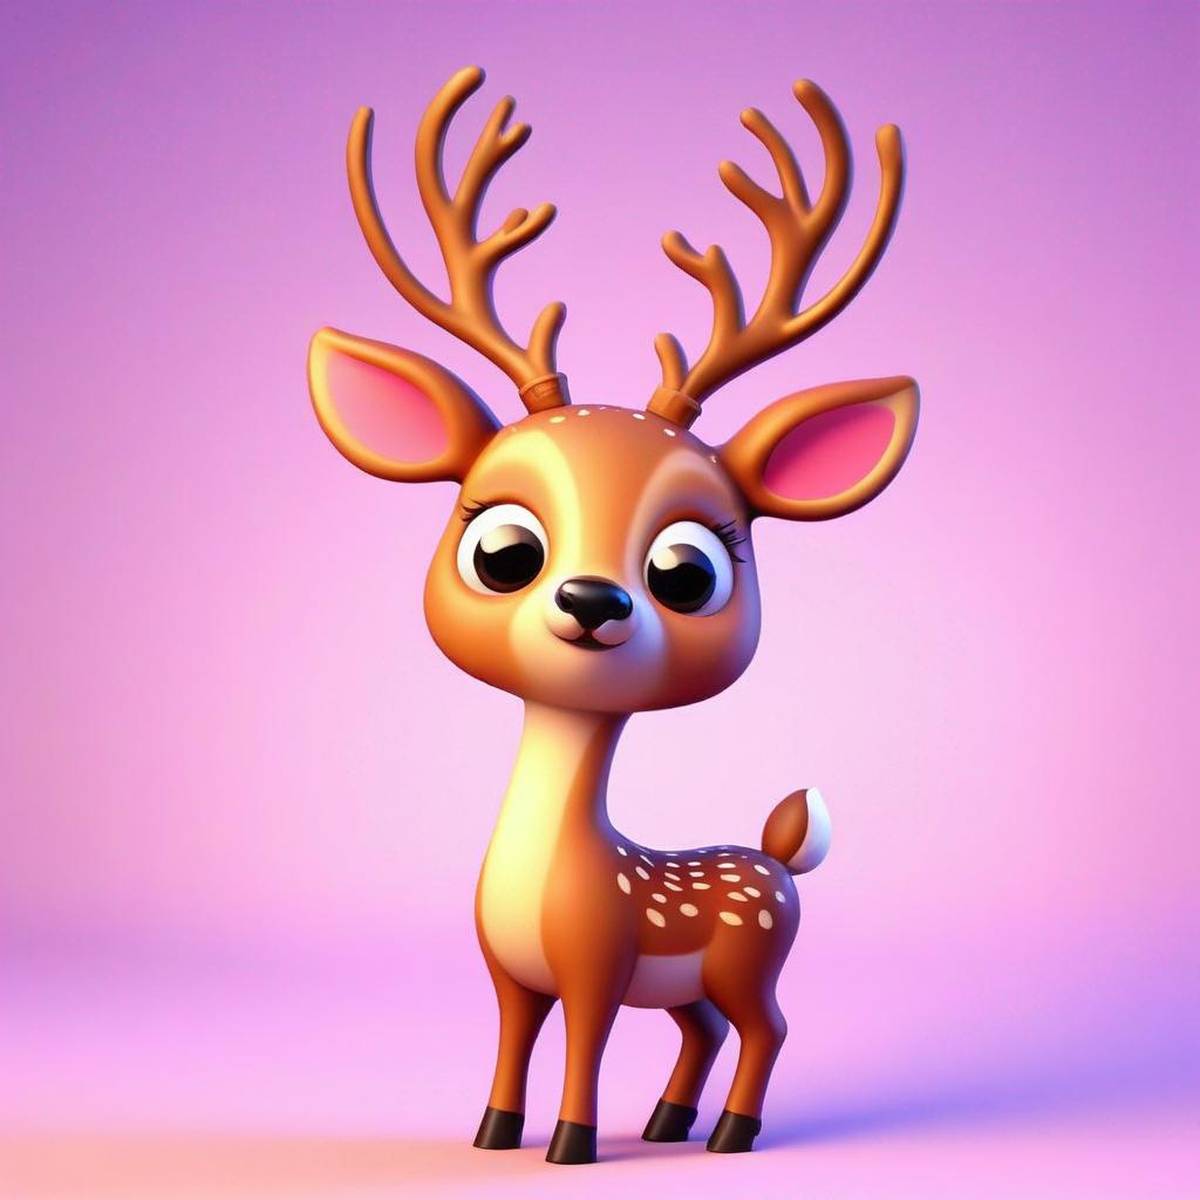 Deer puns